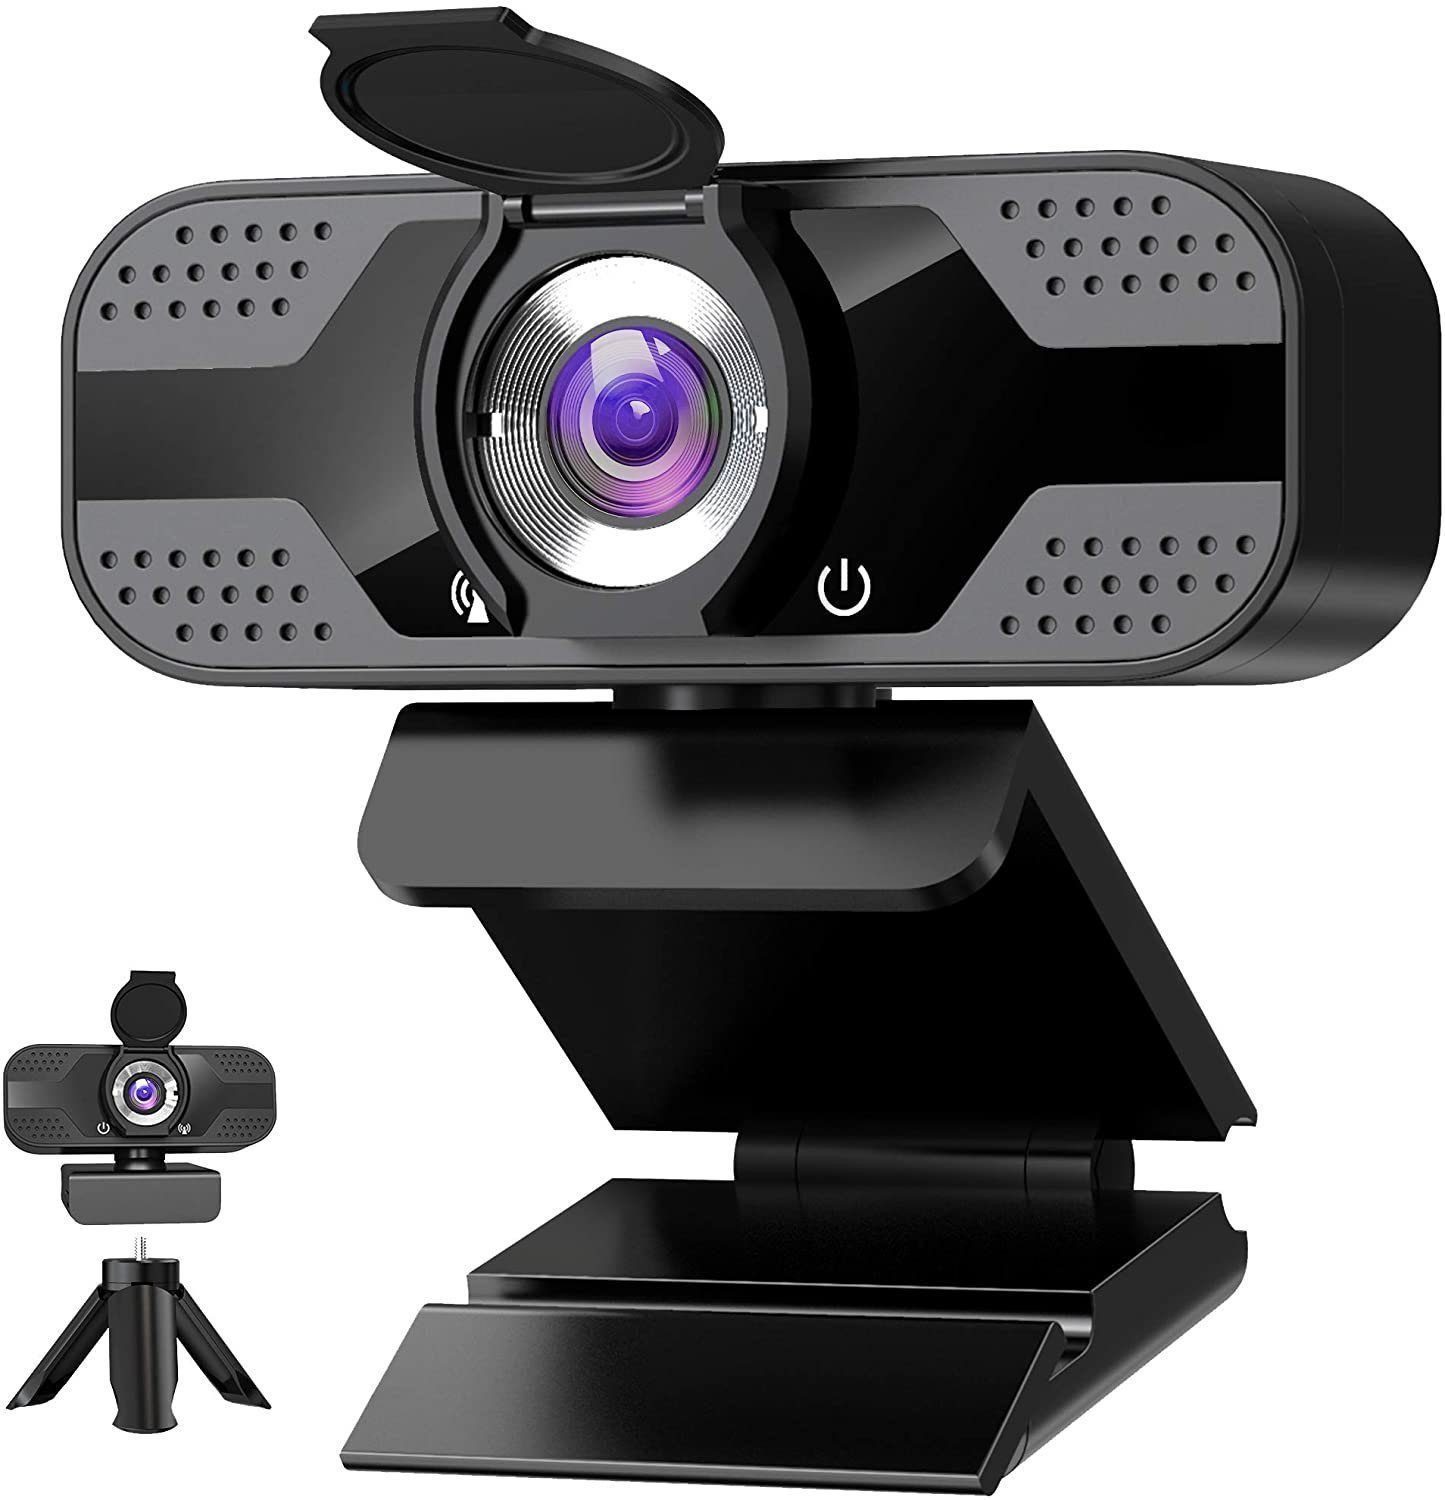 HOUROC 1080P Webcam mit Mikrofon und Ringlicht, Full HD Facecam Full HD-Webcam (HD, WLAN (Wi-Fi), Live-Streaming Webcam mit Stativ 360°für PC/MAC/Desktop, USB Kamera Web Cam für YouTube,Skype,Xbox(Weiß/Warmes Licht)-notfall)